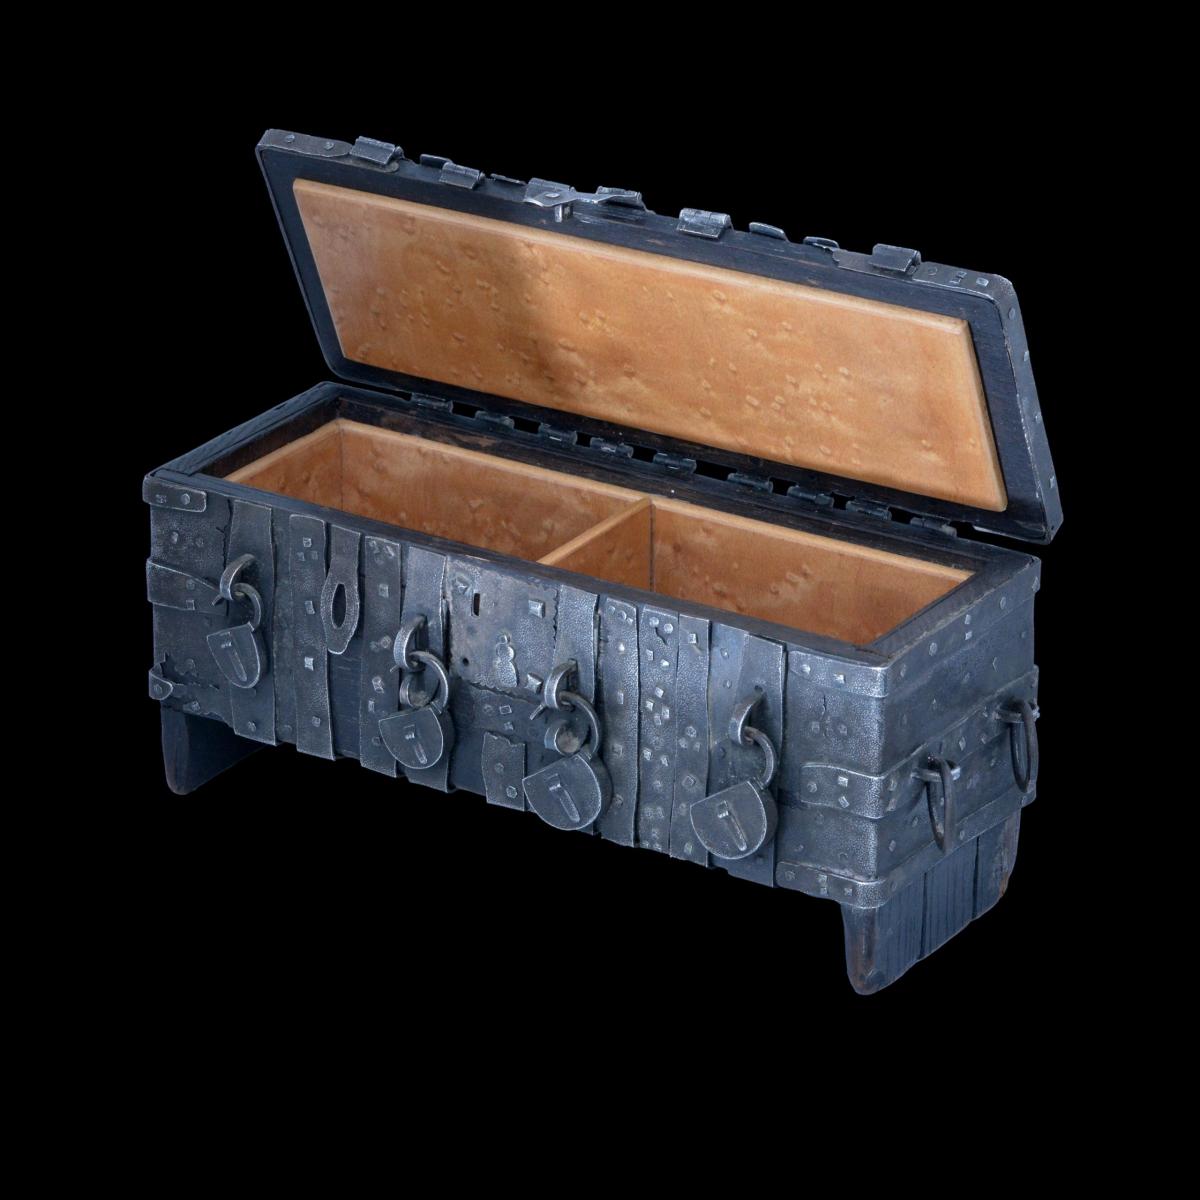 An extraordinary silver strong box casket by Barnard & Sons